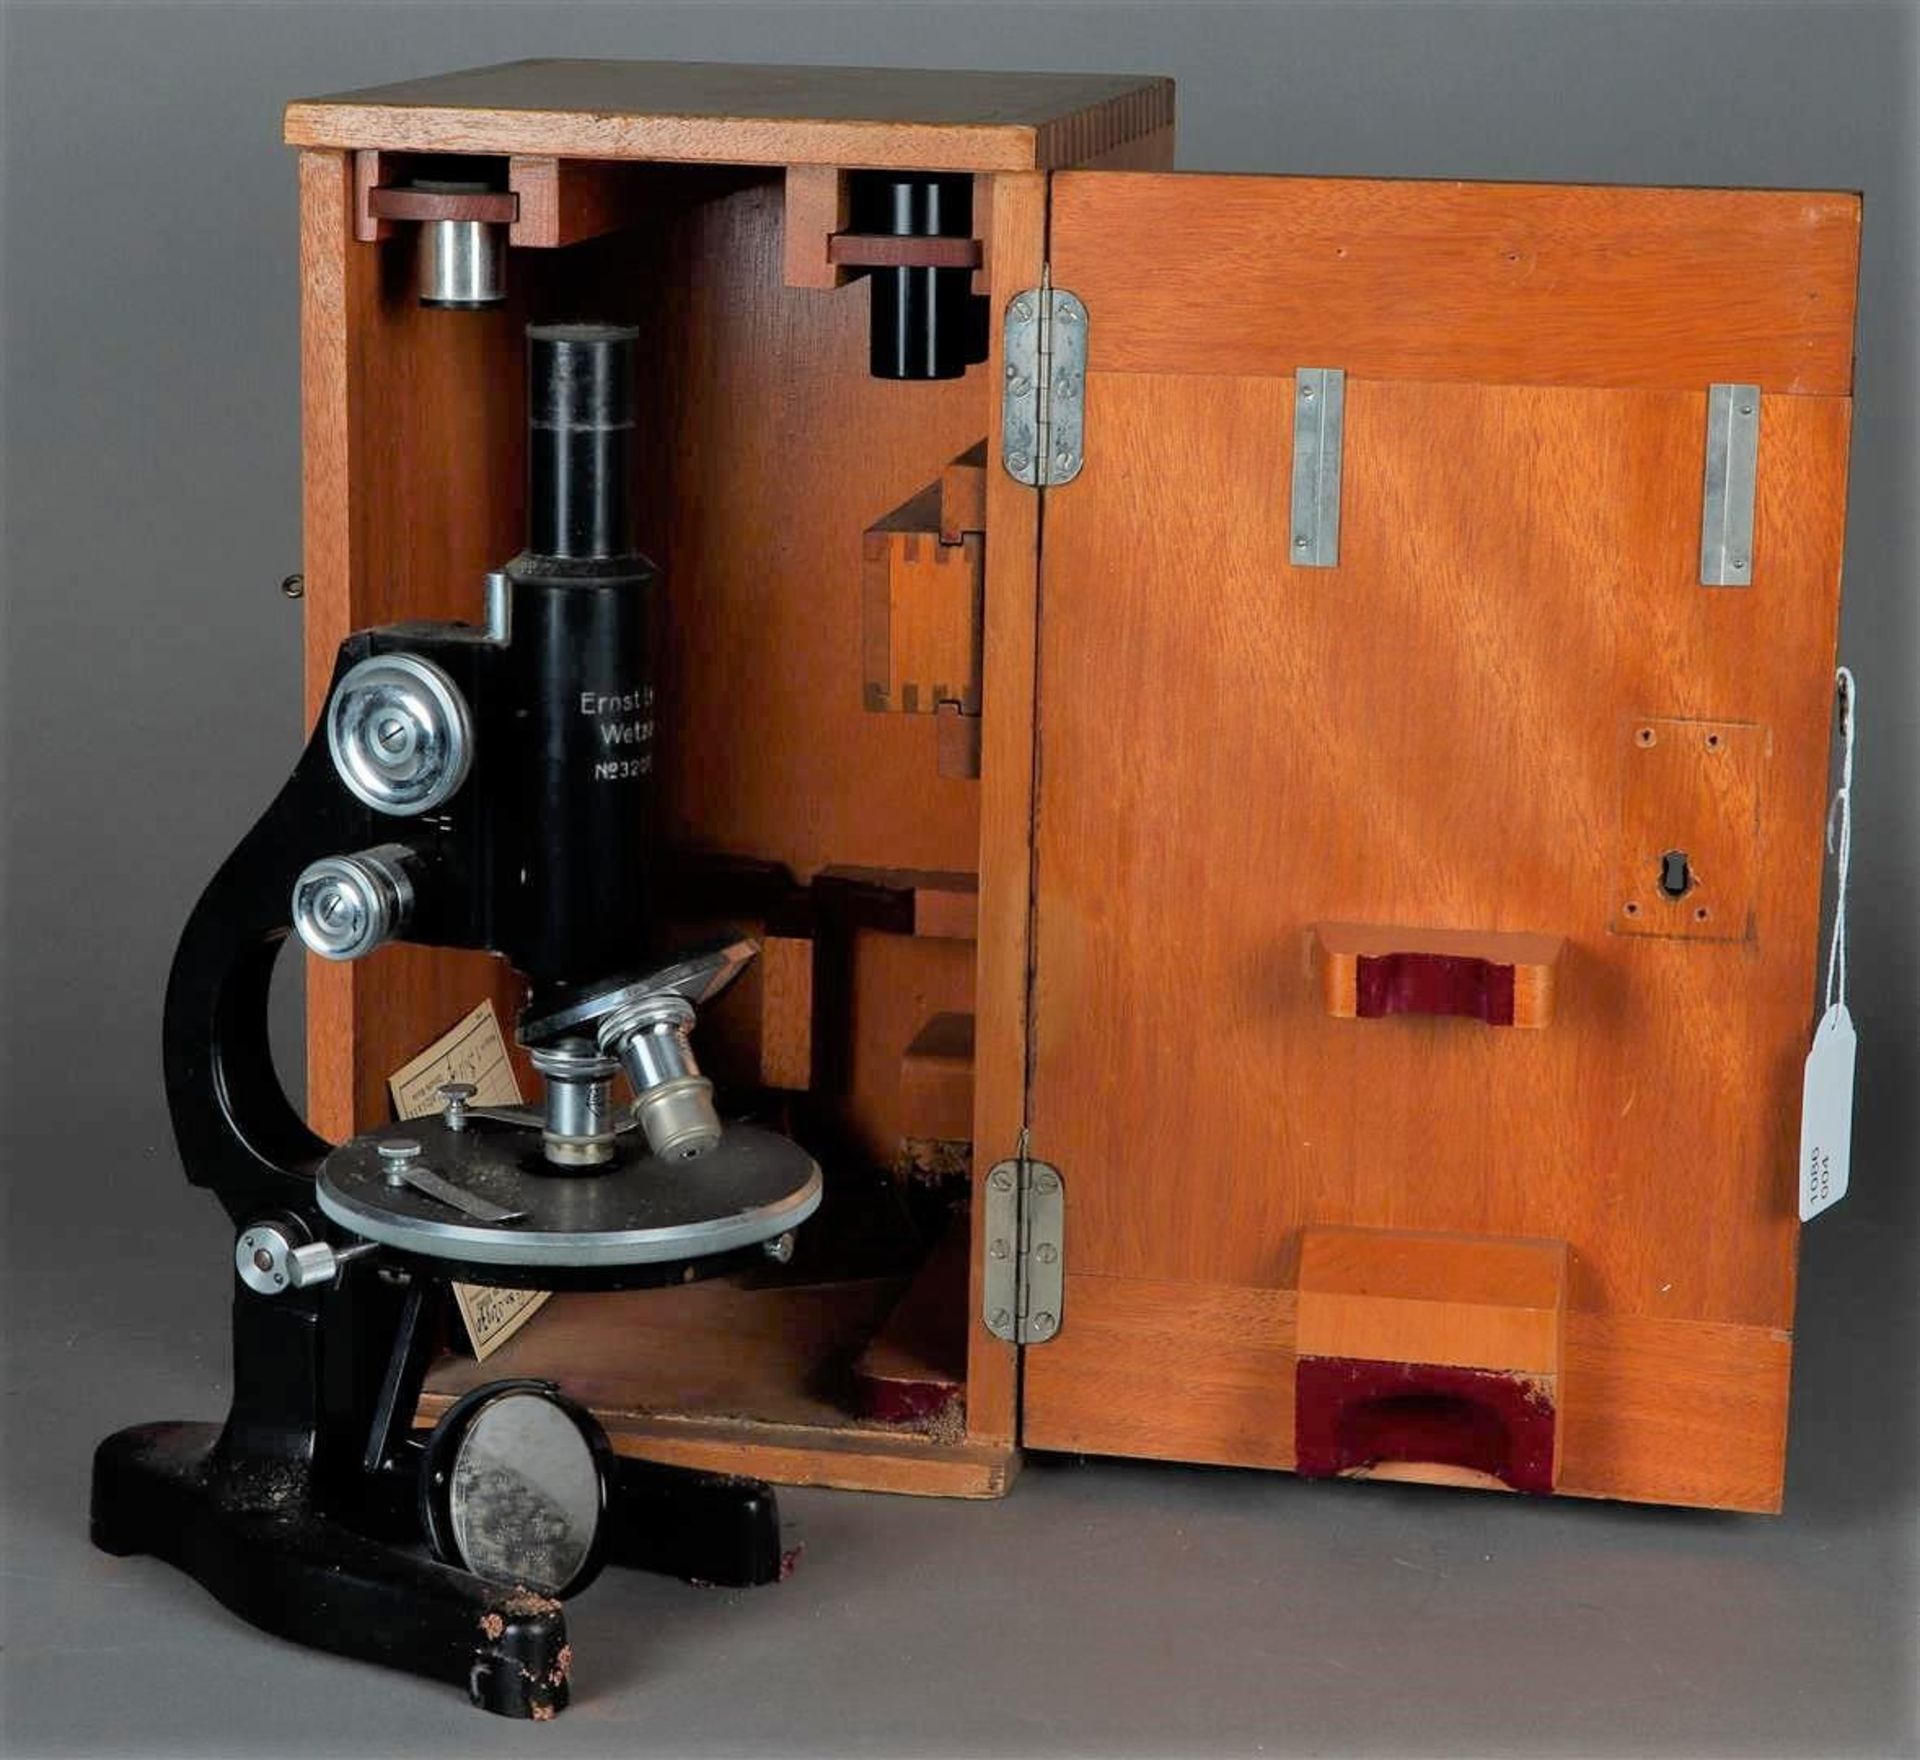 A medical microscope, C. Roosen and Son, Fa. Mulder, Leiden. In original box.